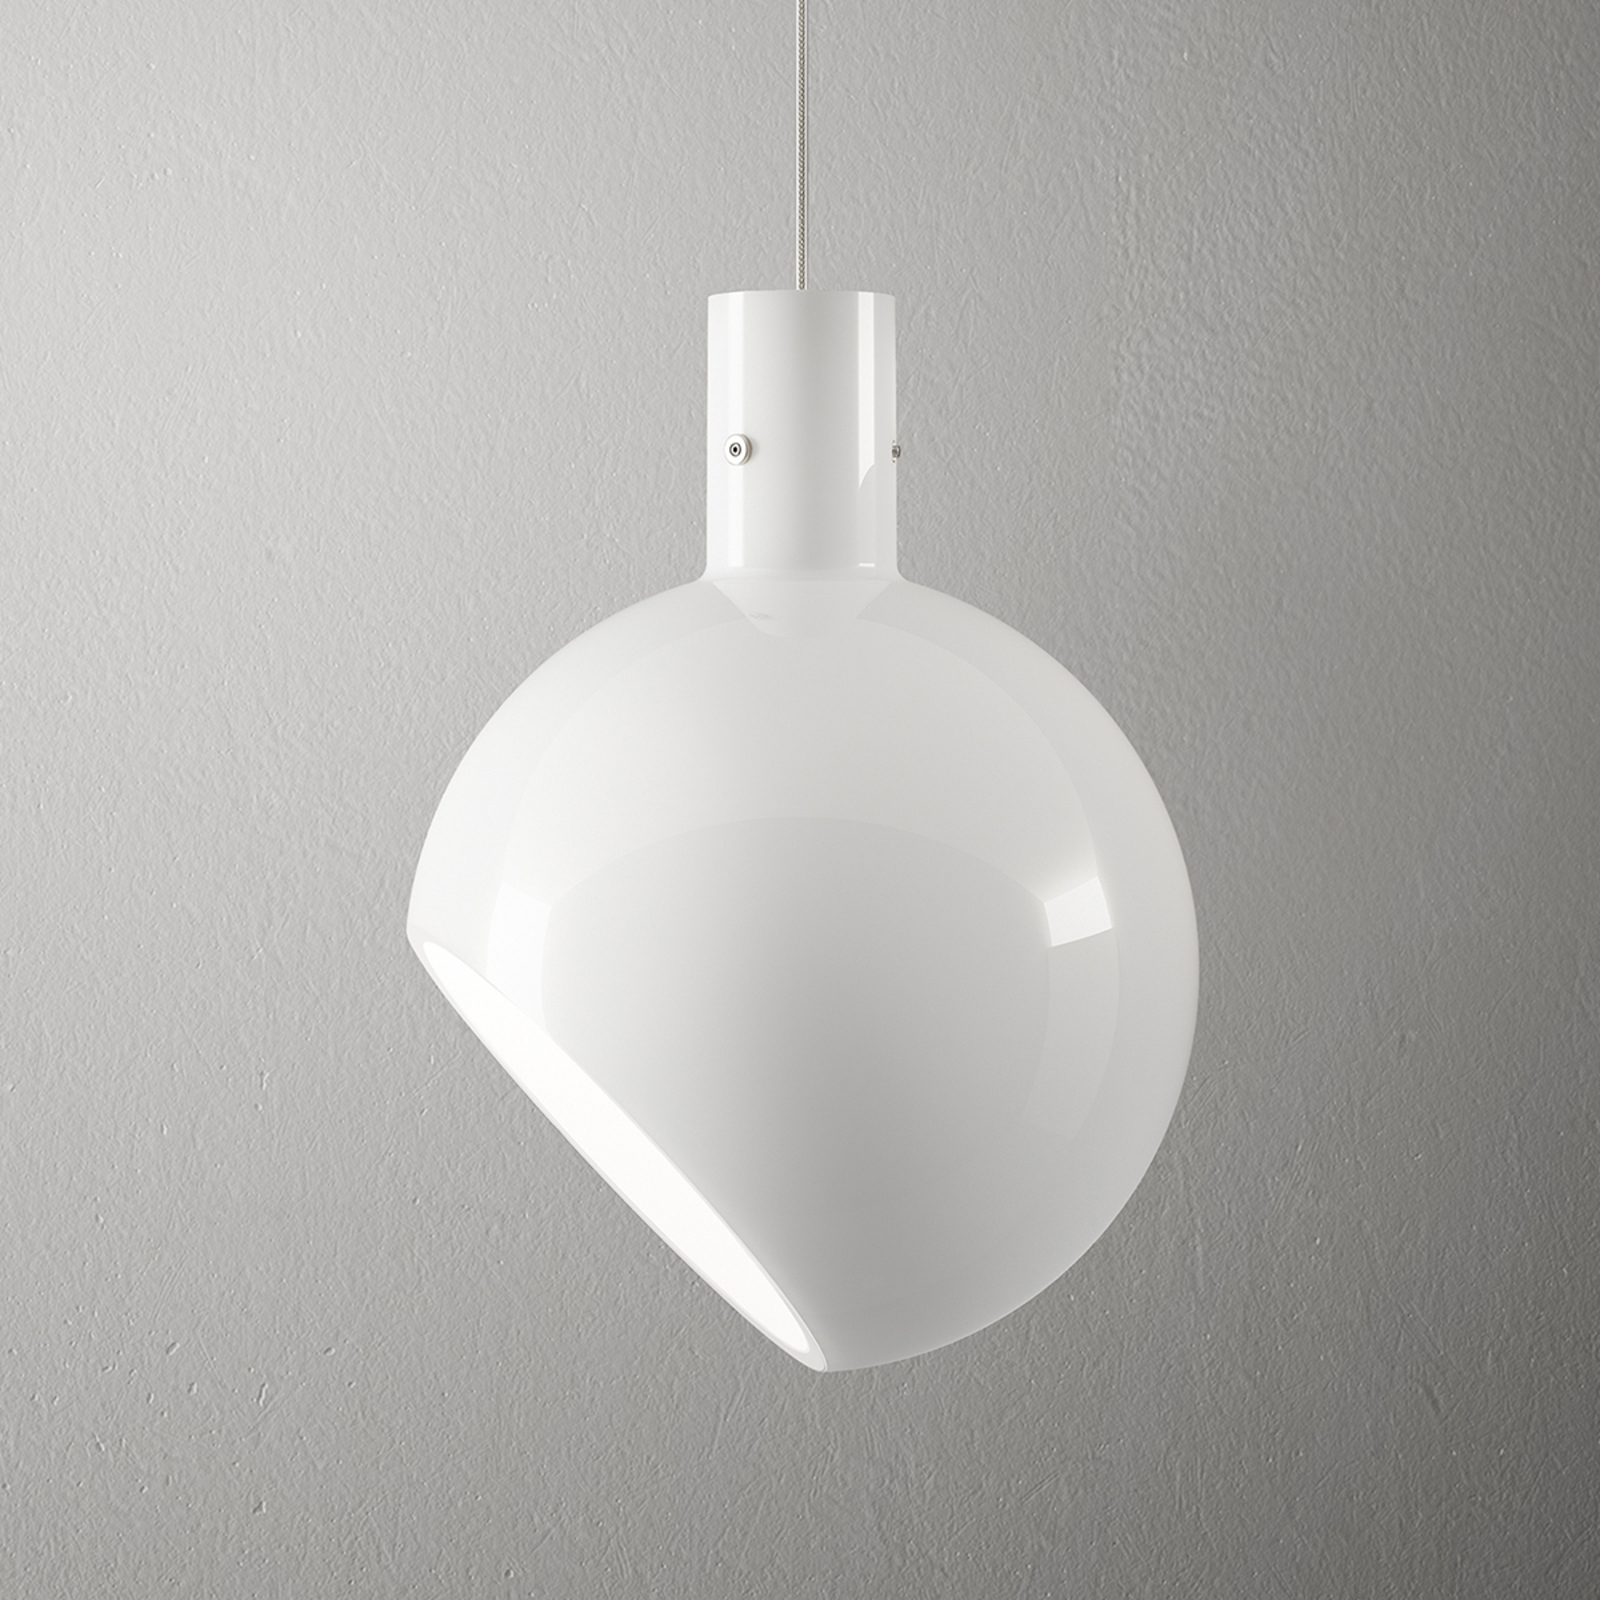 Atractiva lámpara colgante LED Parola